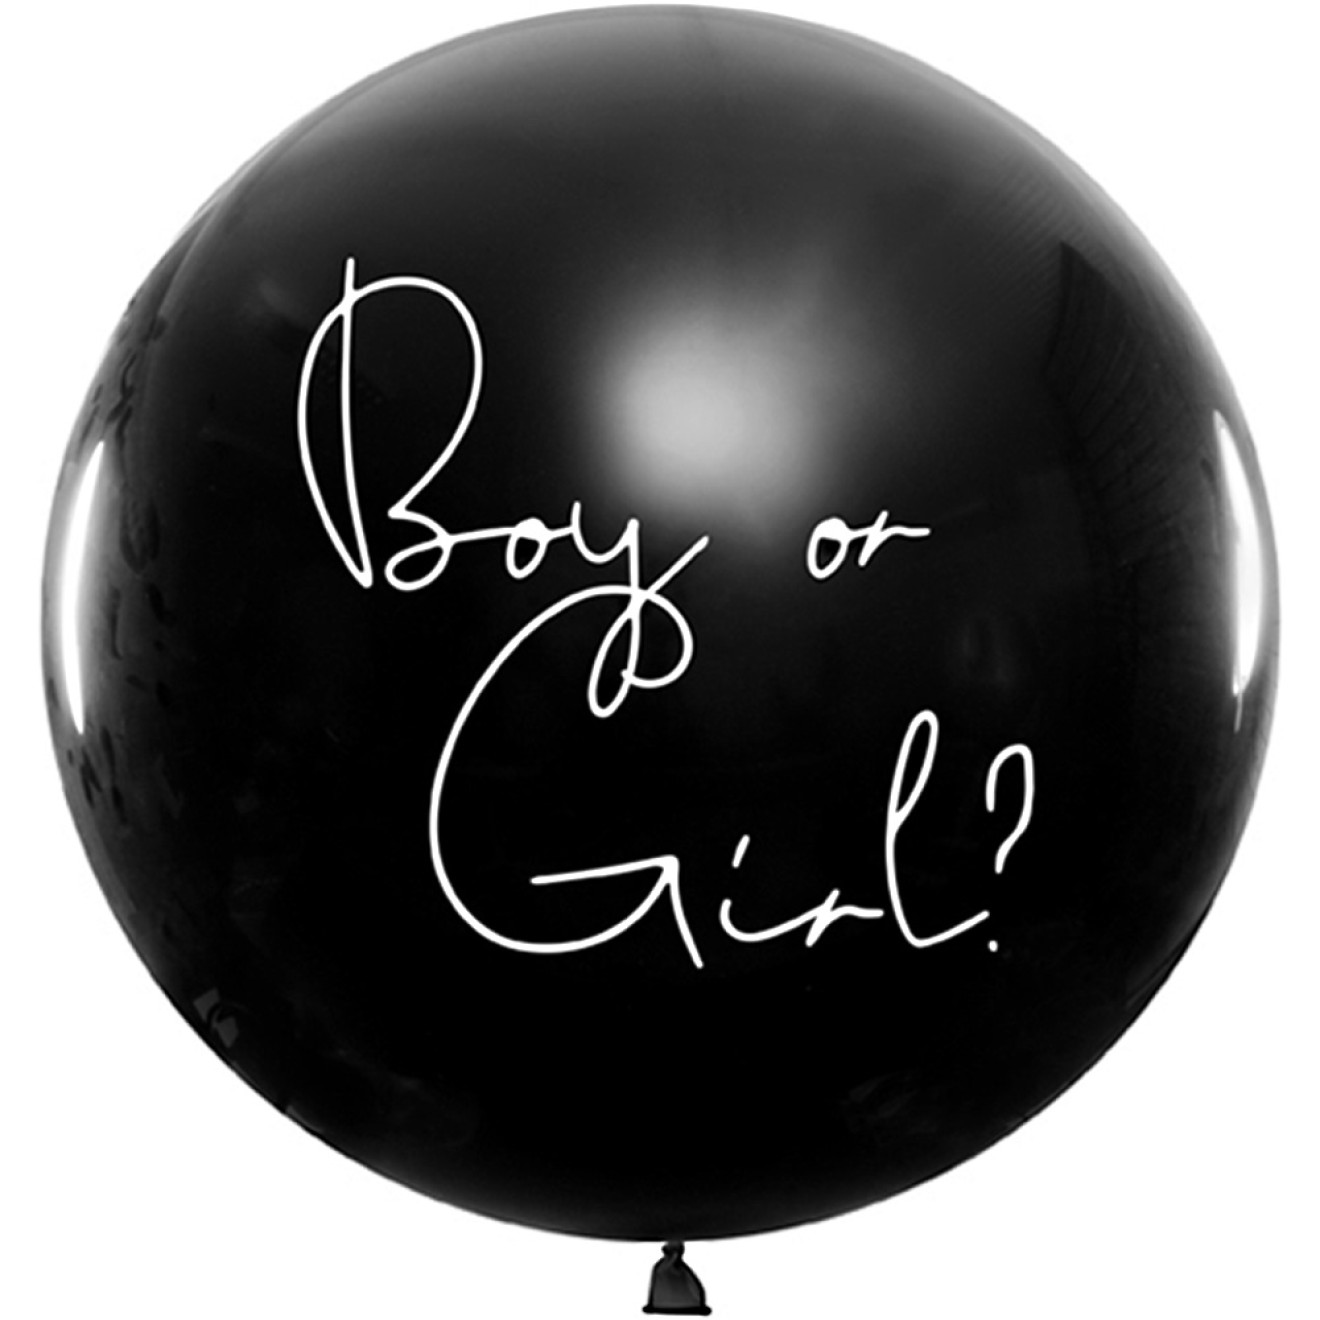 Konfetti Riesenballons - Boy or Girl - 1 m - Freie Farbwahl